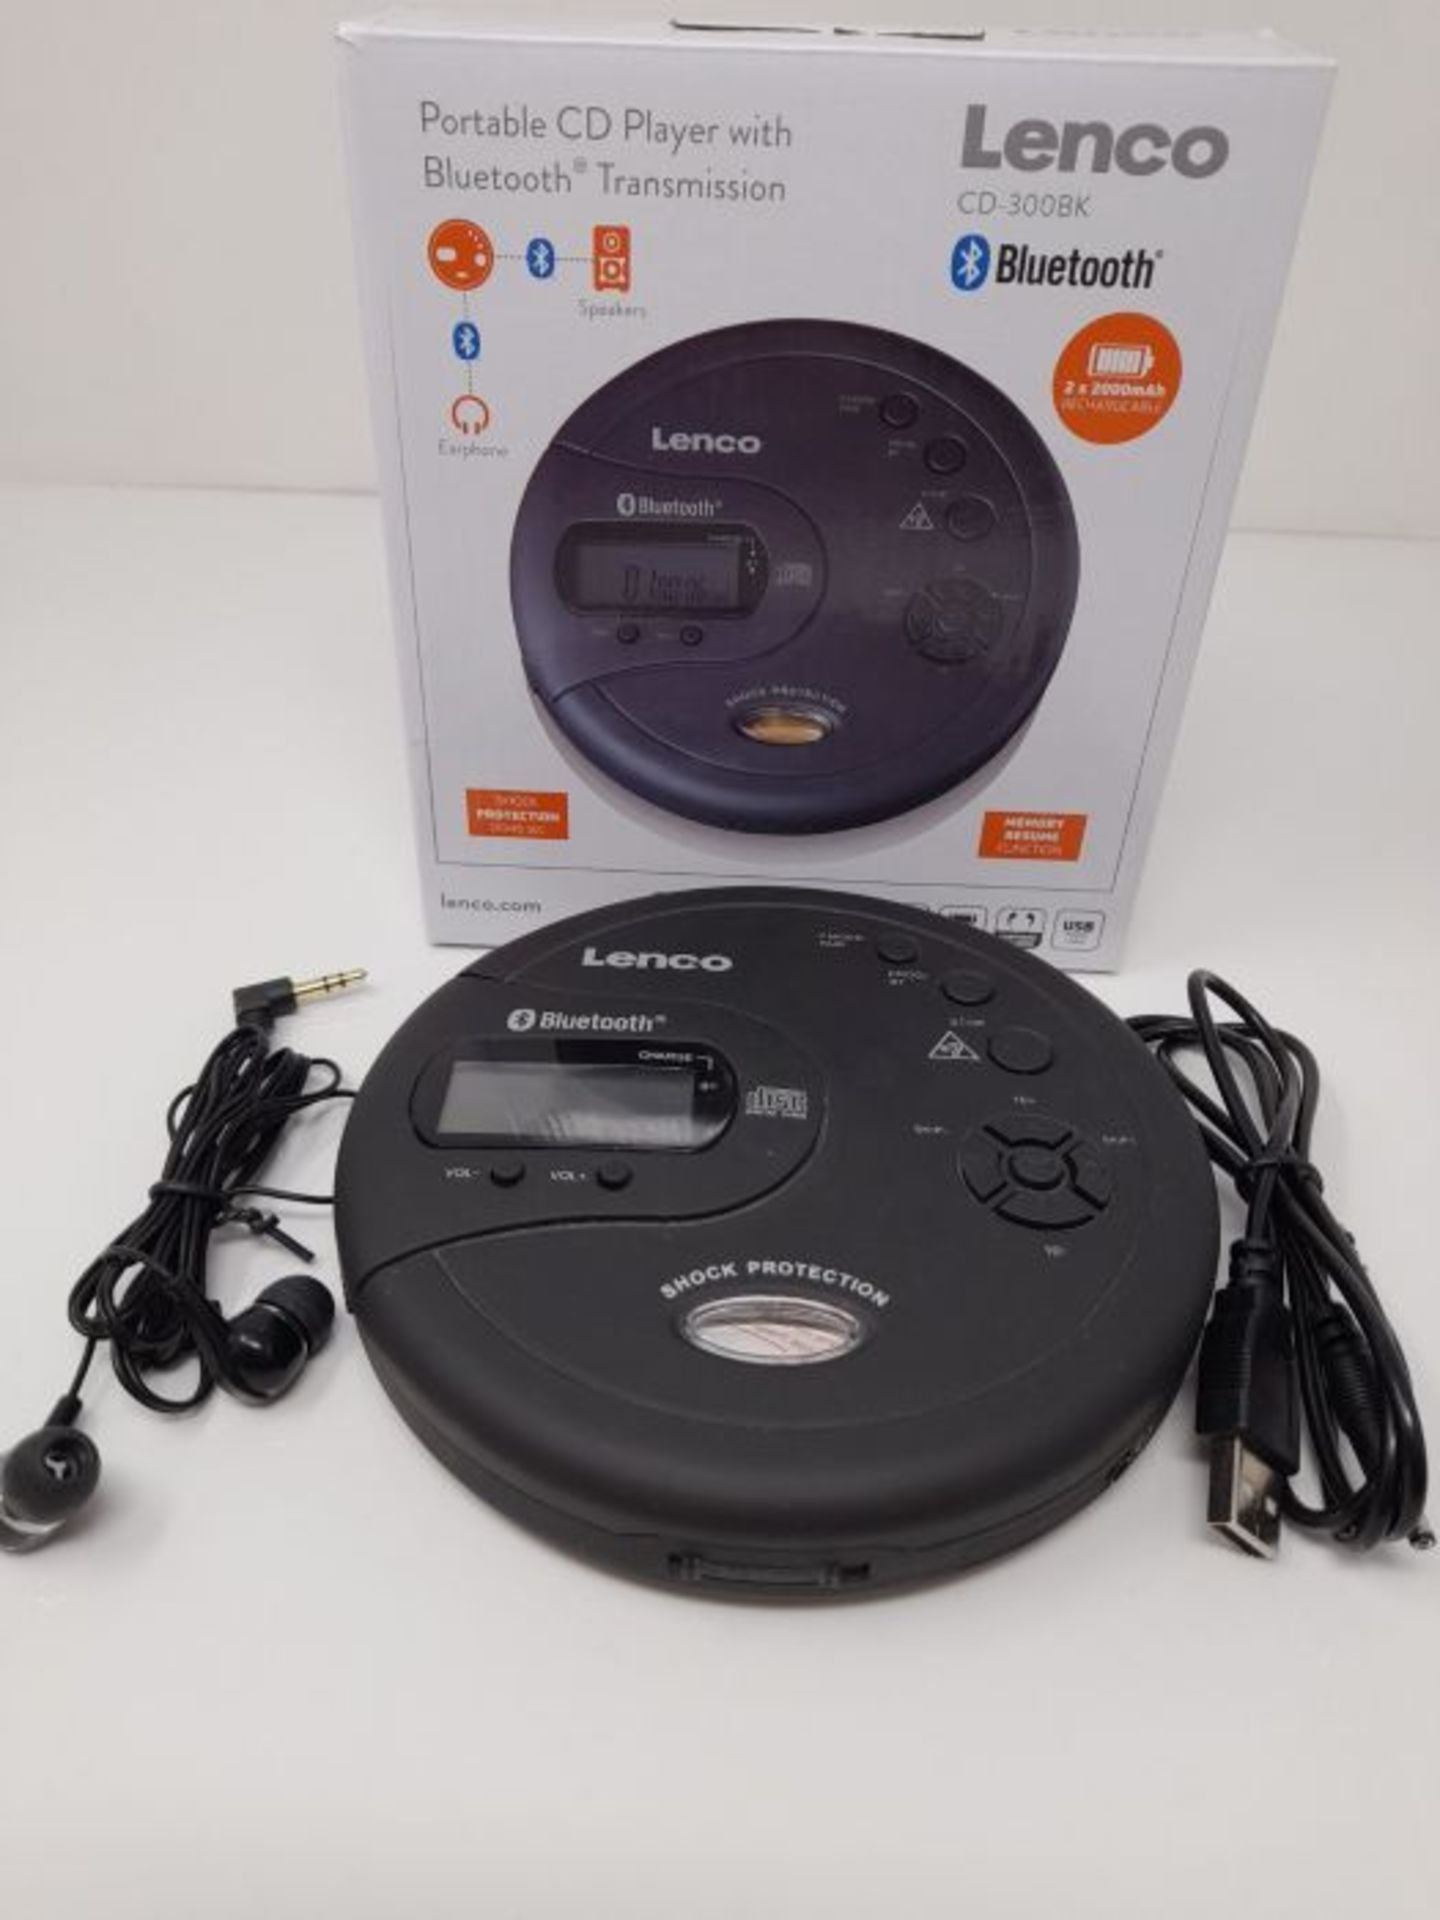 RRP £59.00 Lenco CD-300 - Portable CD Player Walkman - Bluetooth Diskman - CD Walkman - MP3 Funct - Image 3 of 3